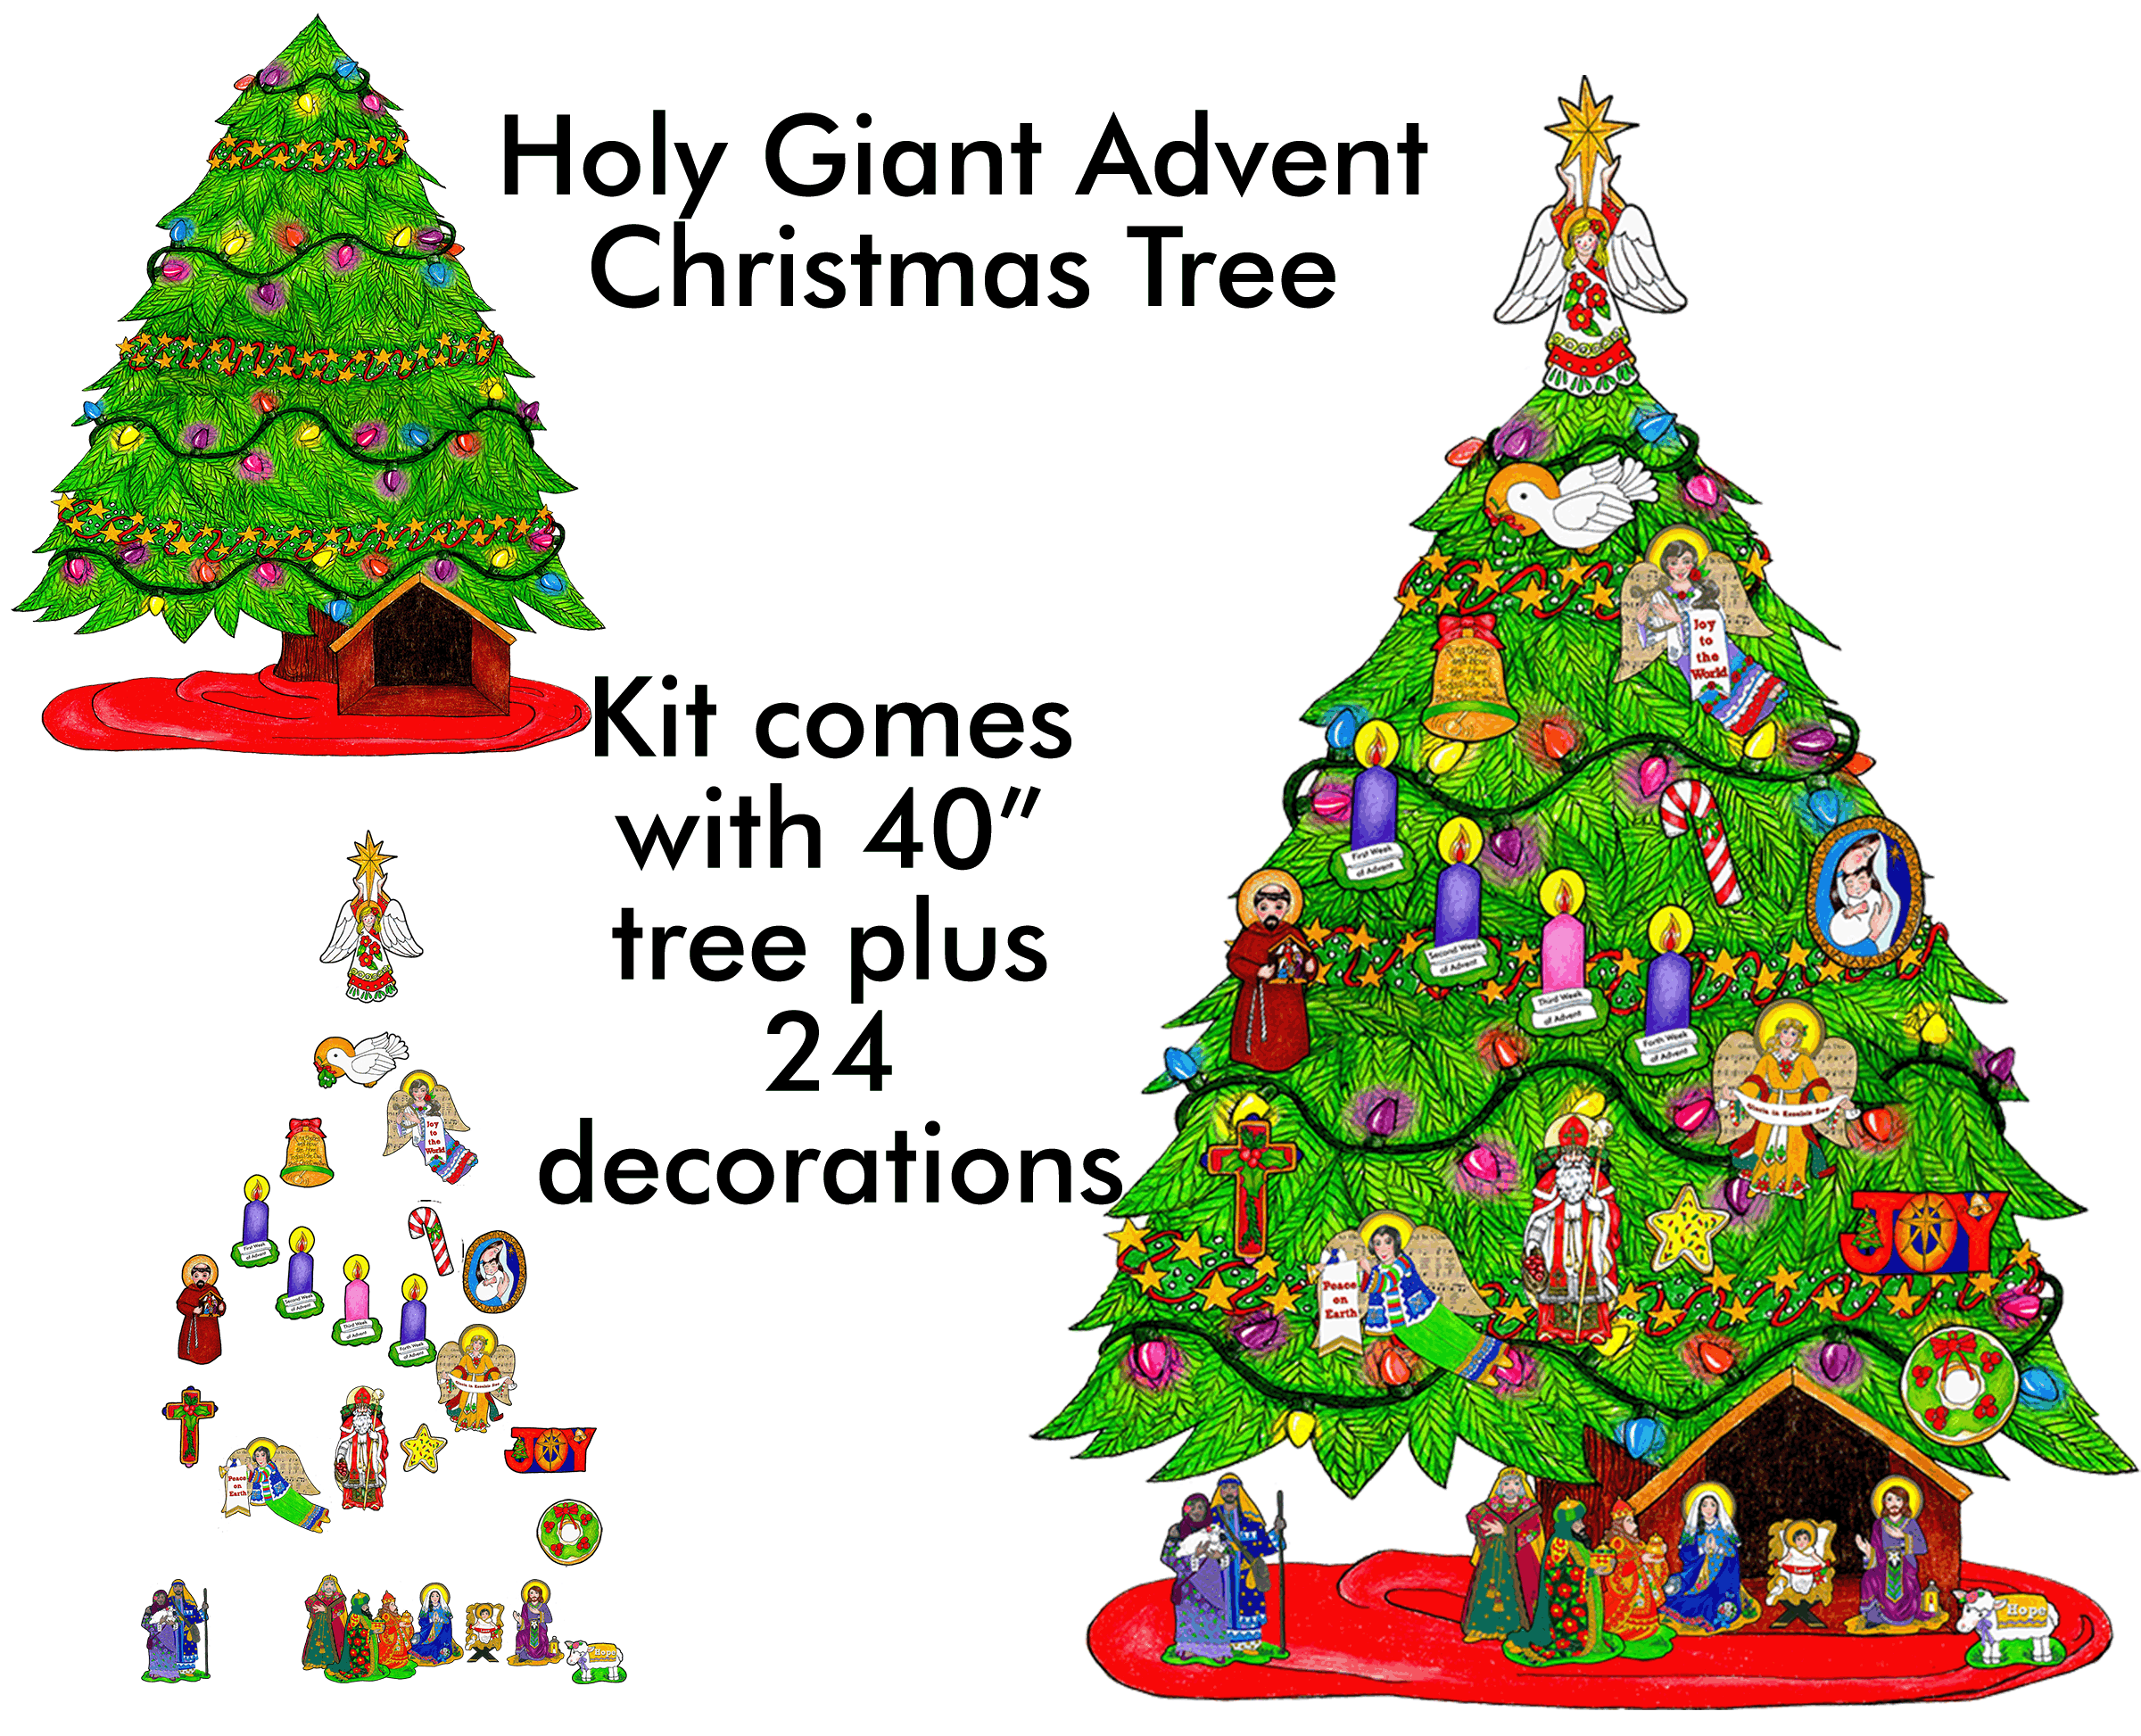 Holy Giant Advent Christmas Tree